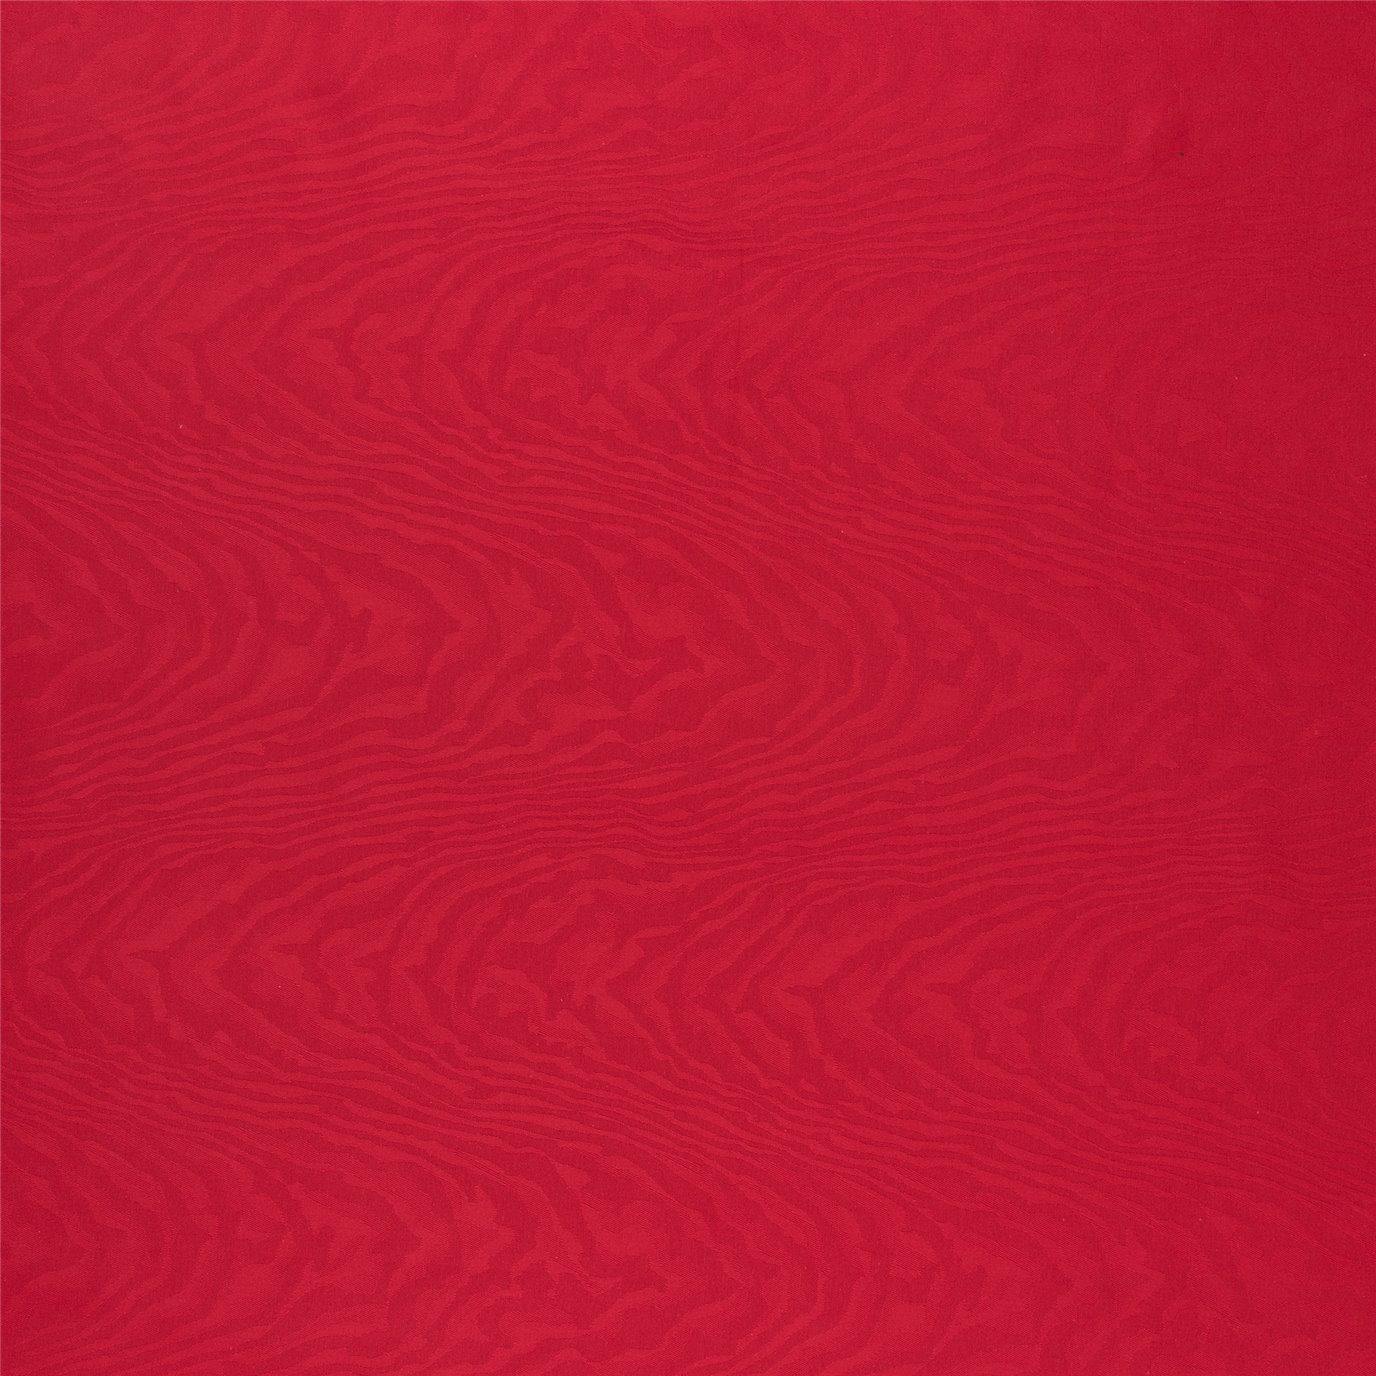 Bouvier Red Jacquard Fabric per yard (non-returnable)